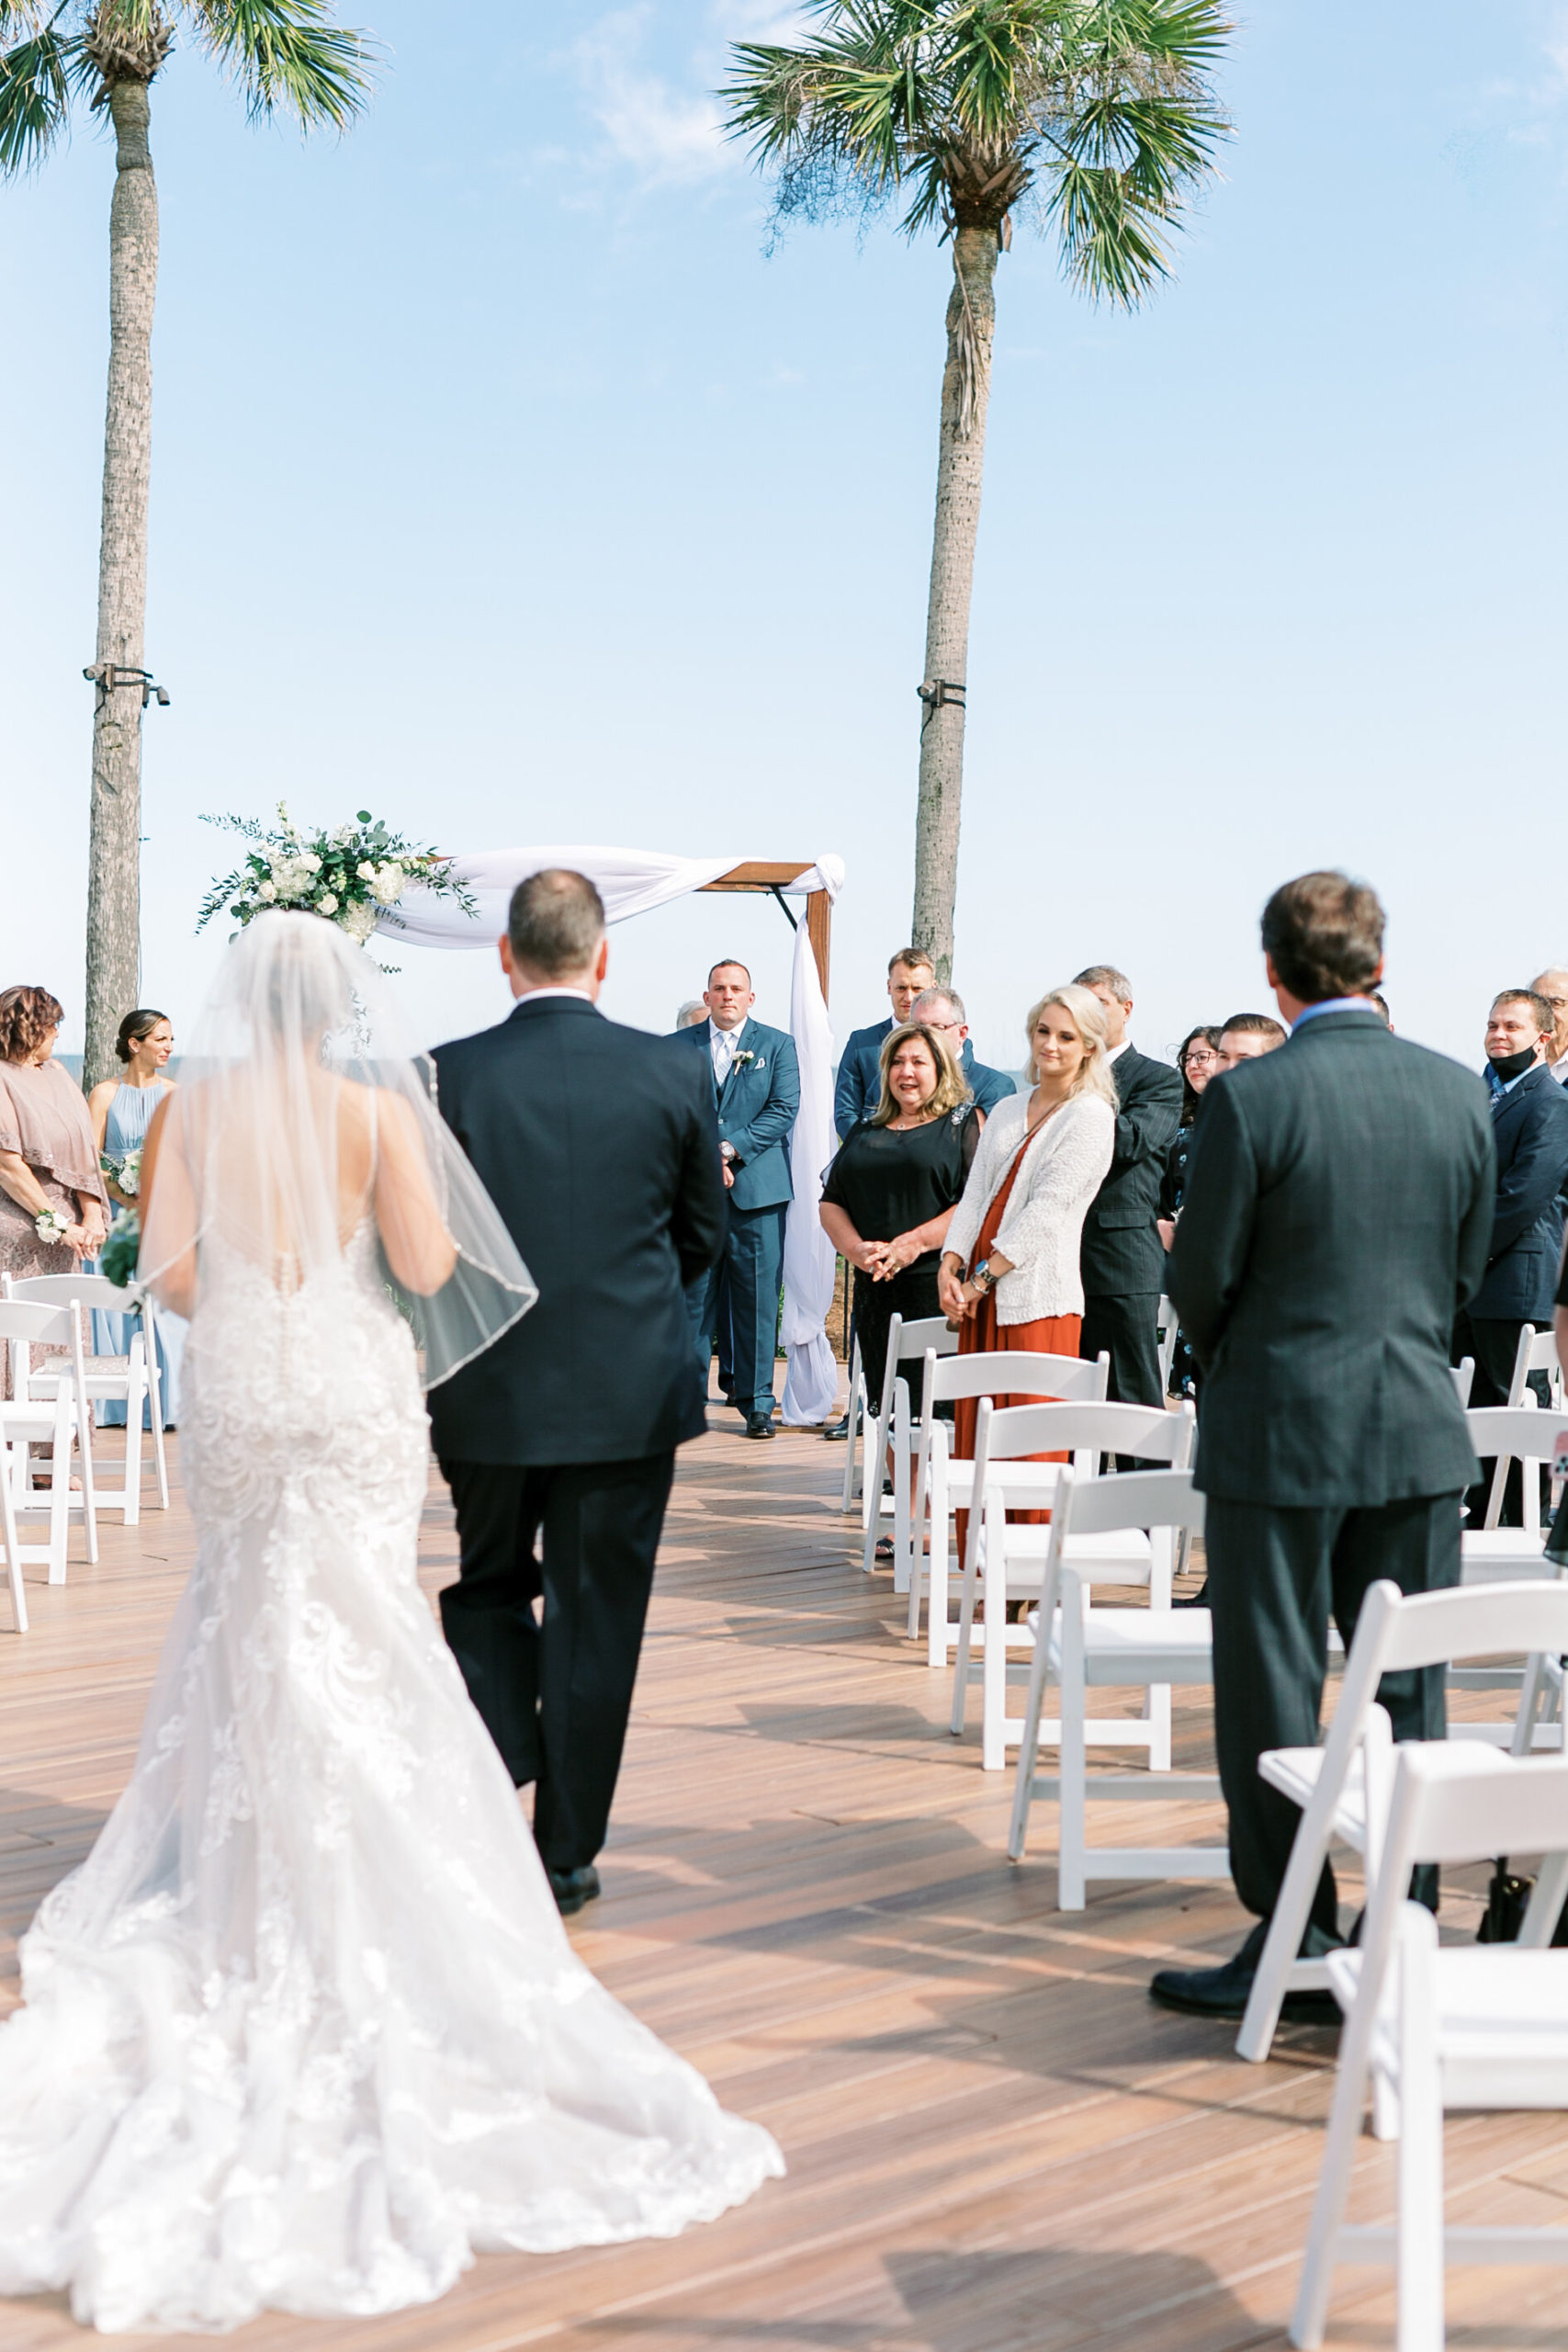 Hilton Head wedding photographer gets shot of bride walking down the aisle at seaside wedding ceremony